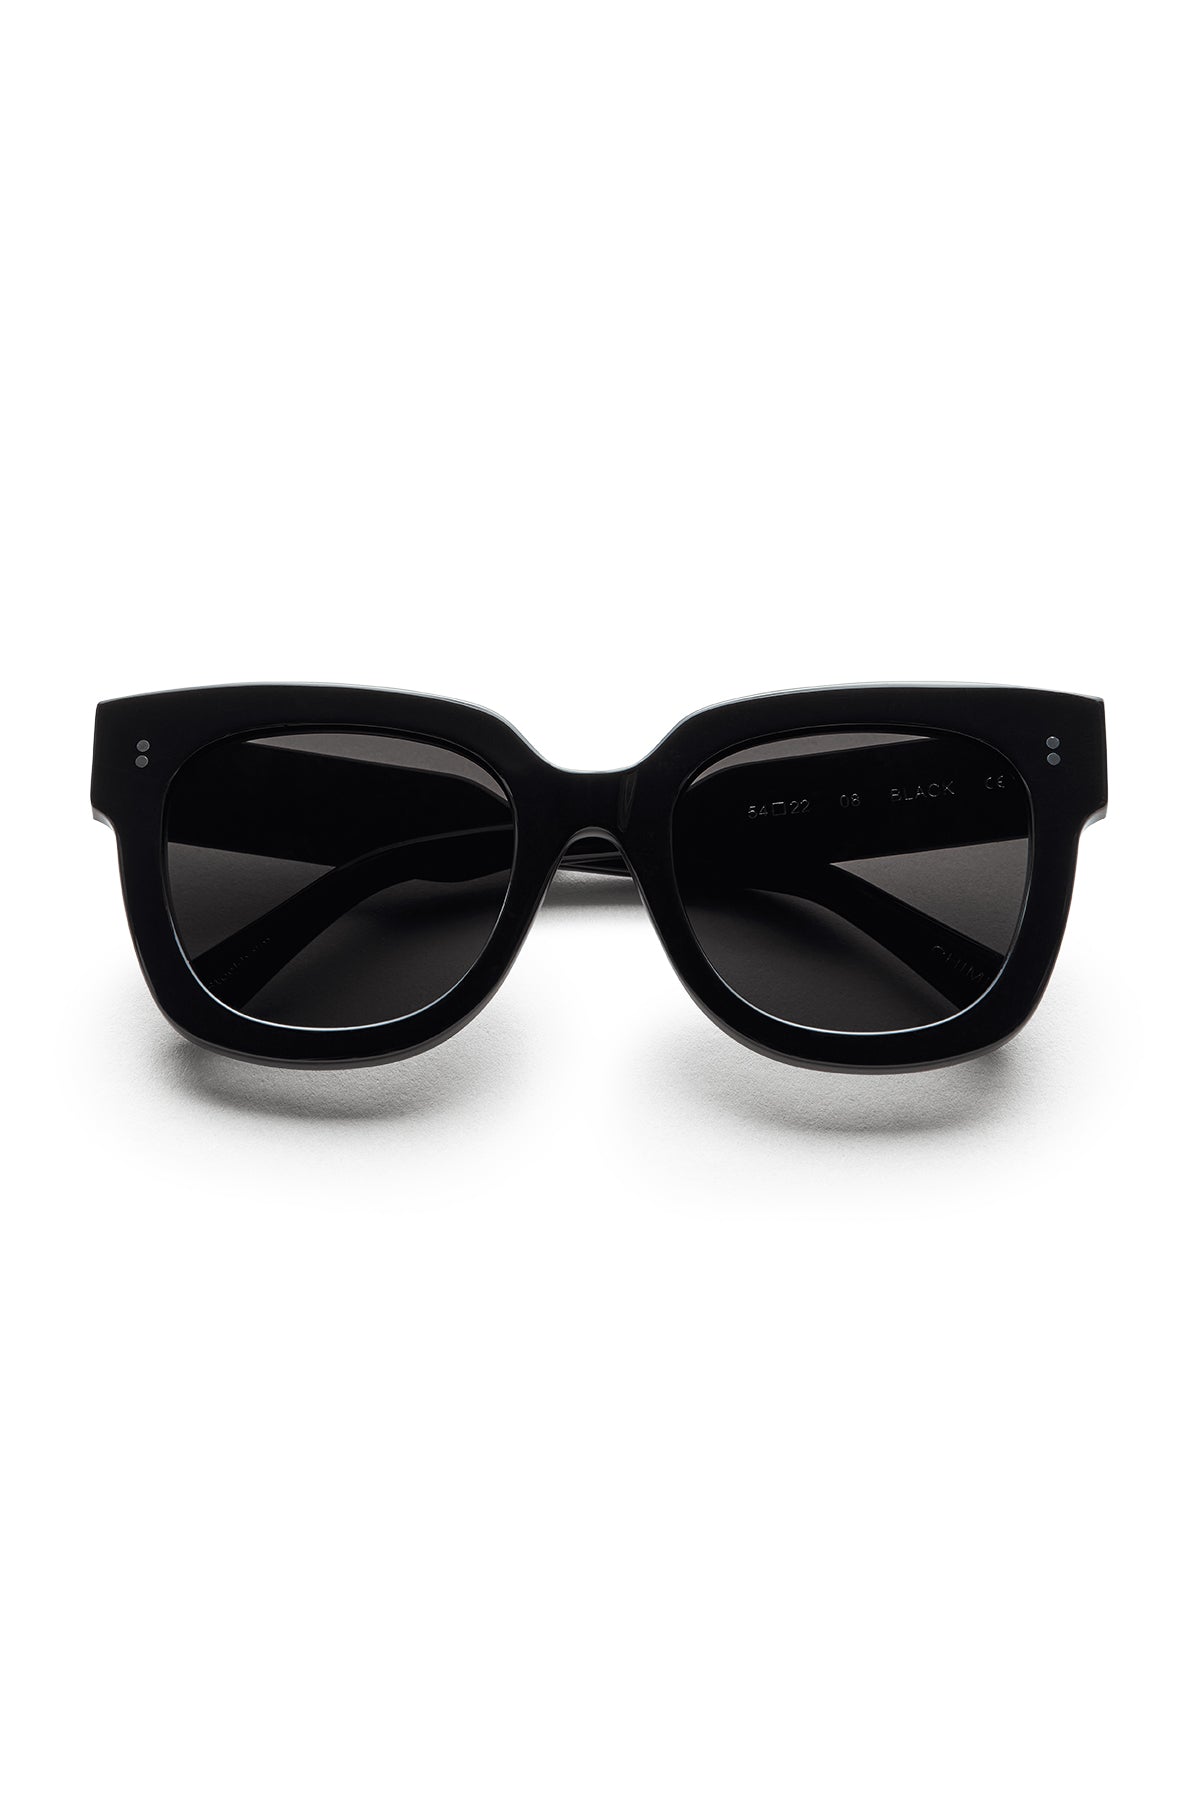   Chimi 08 Sunglasses Black Front 